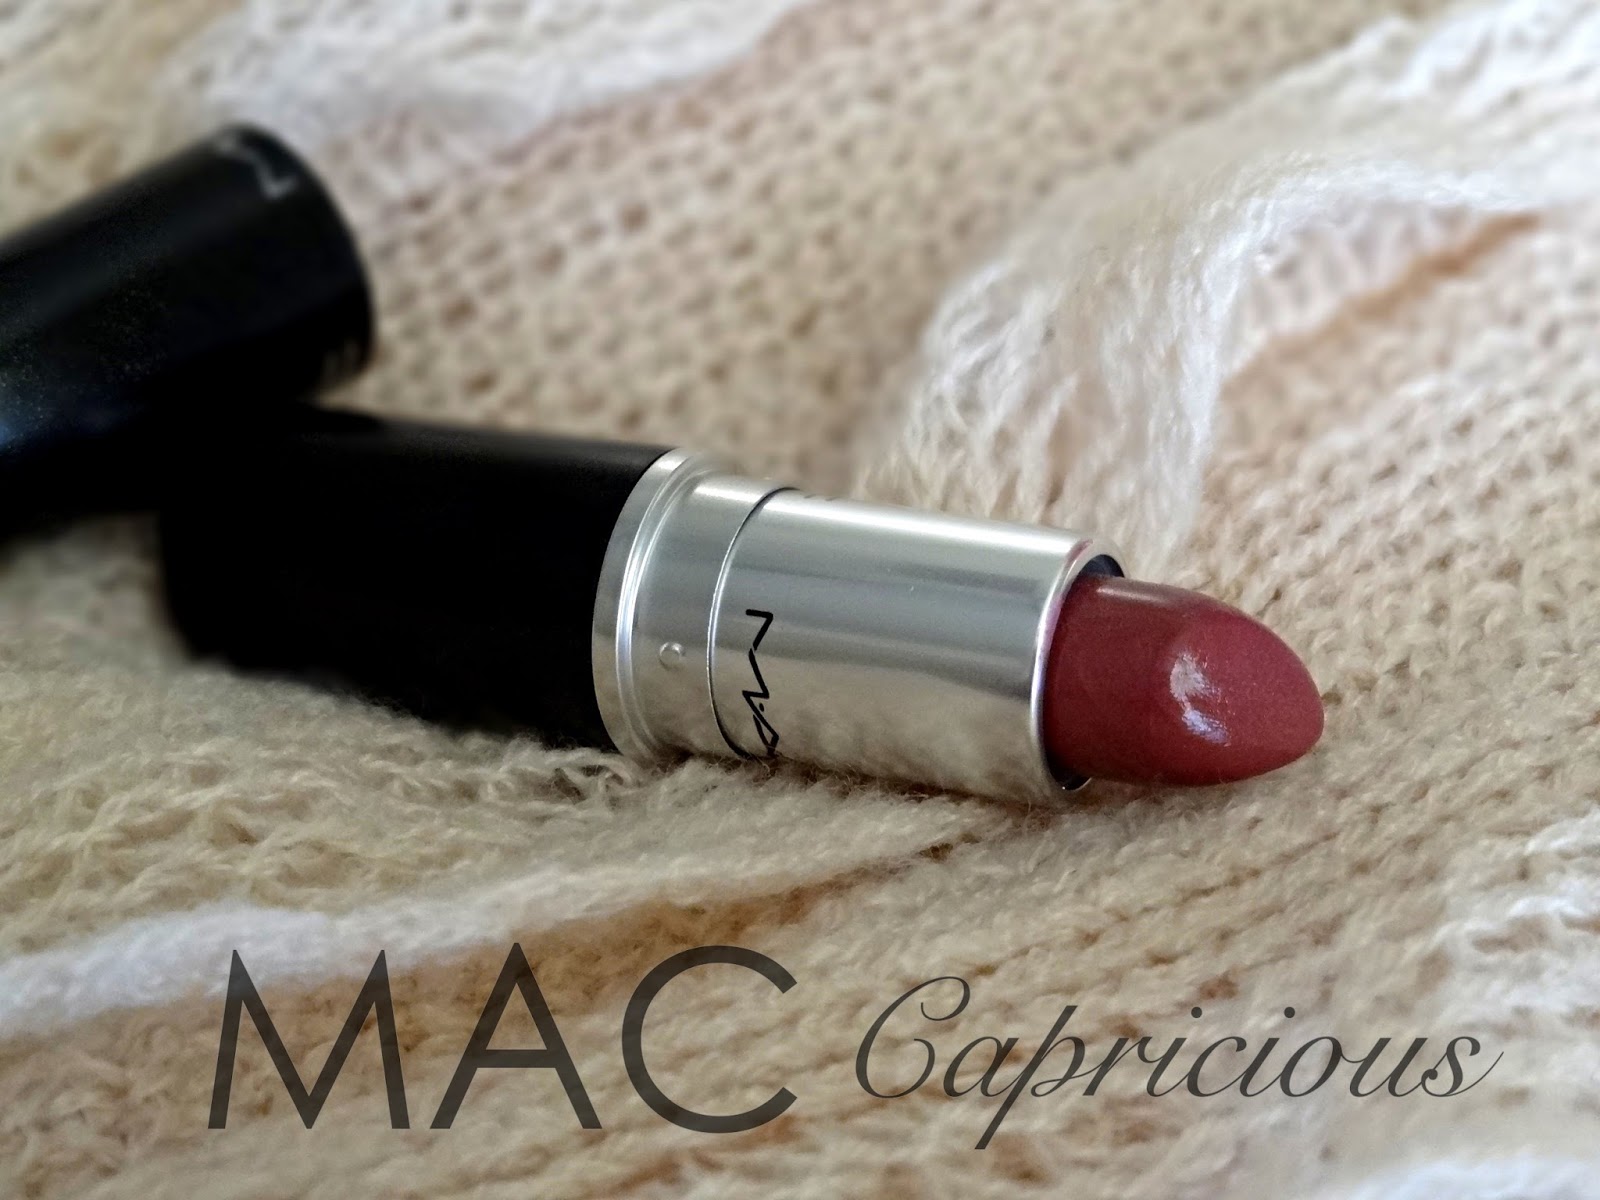 mac capricious lustre lipstick review, Photos & swatches